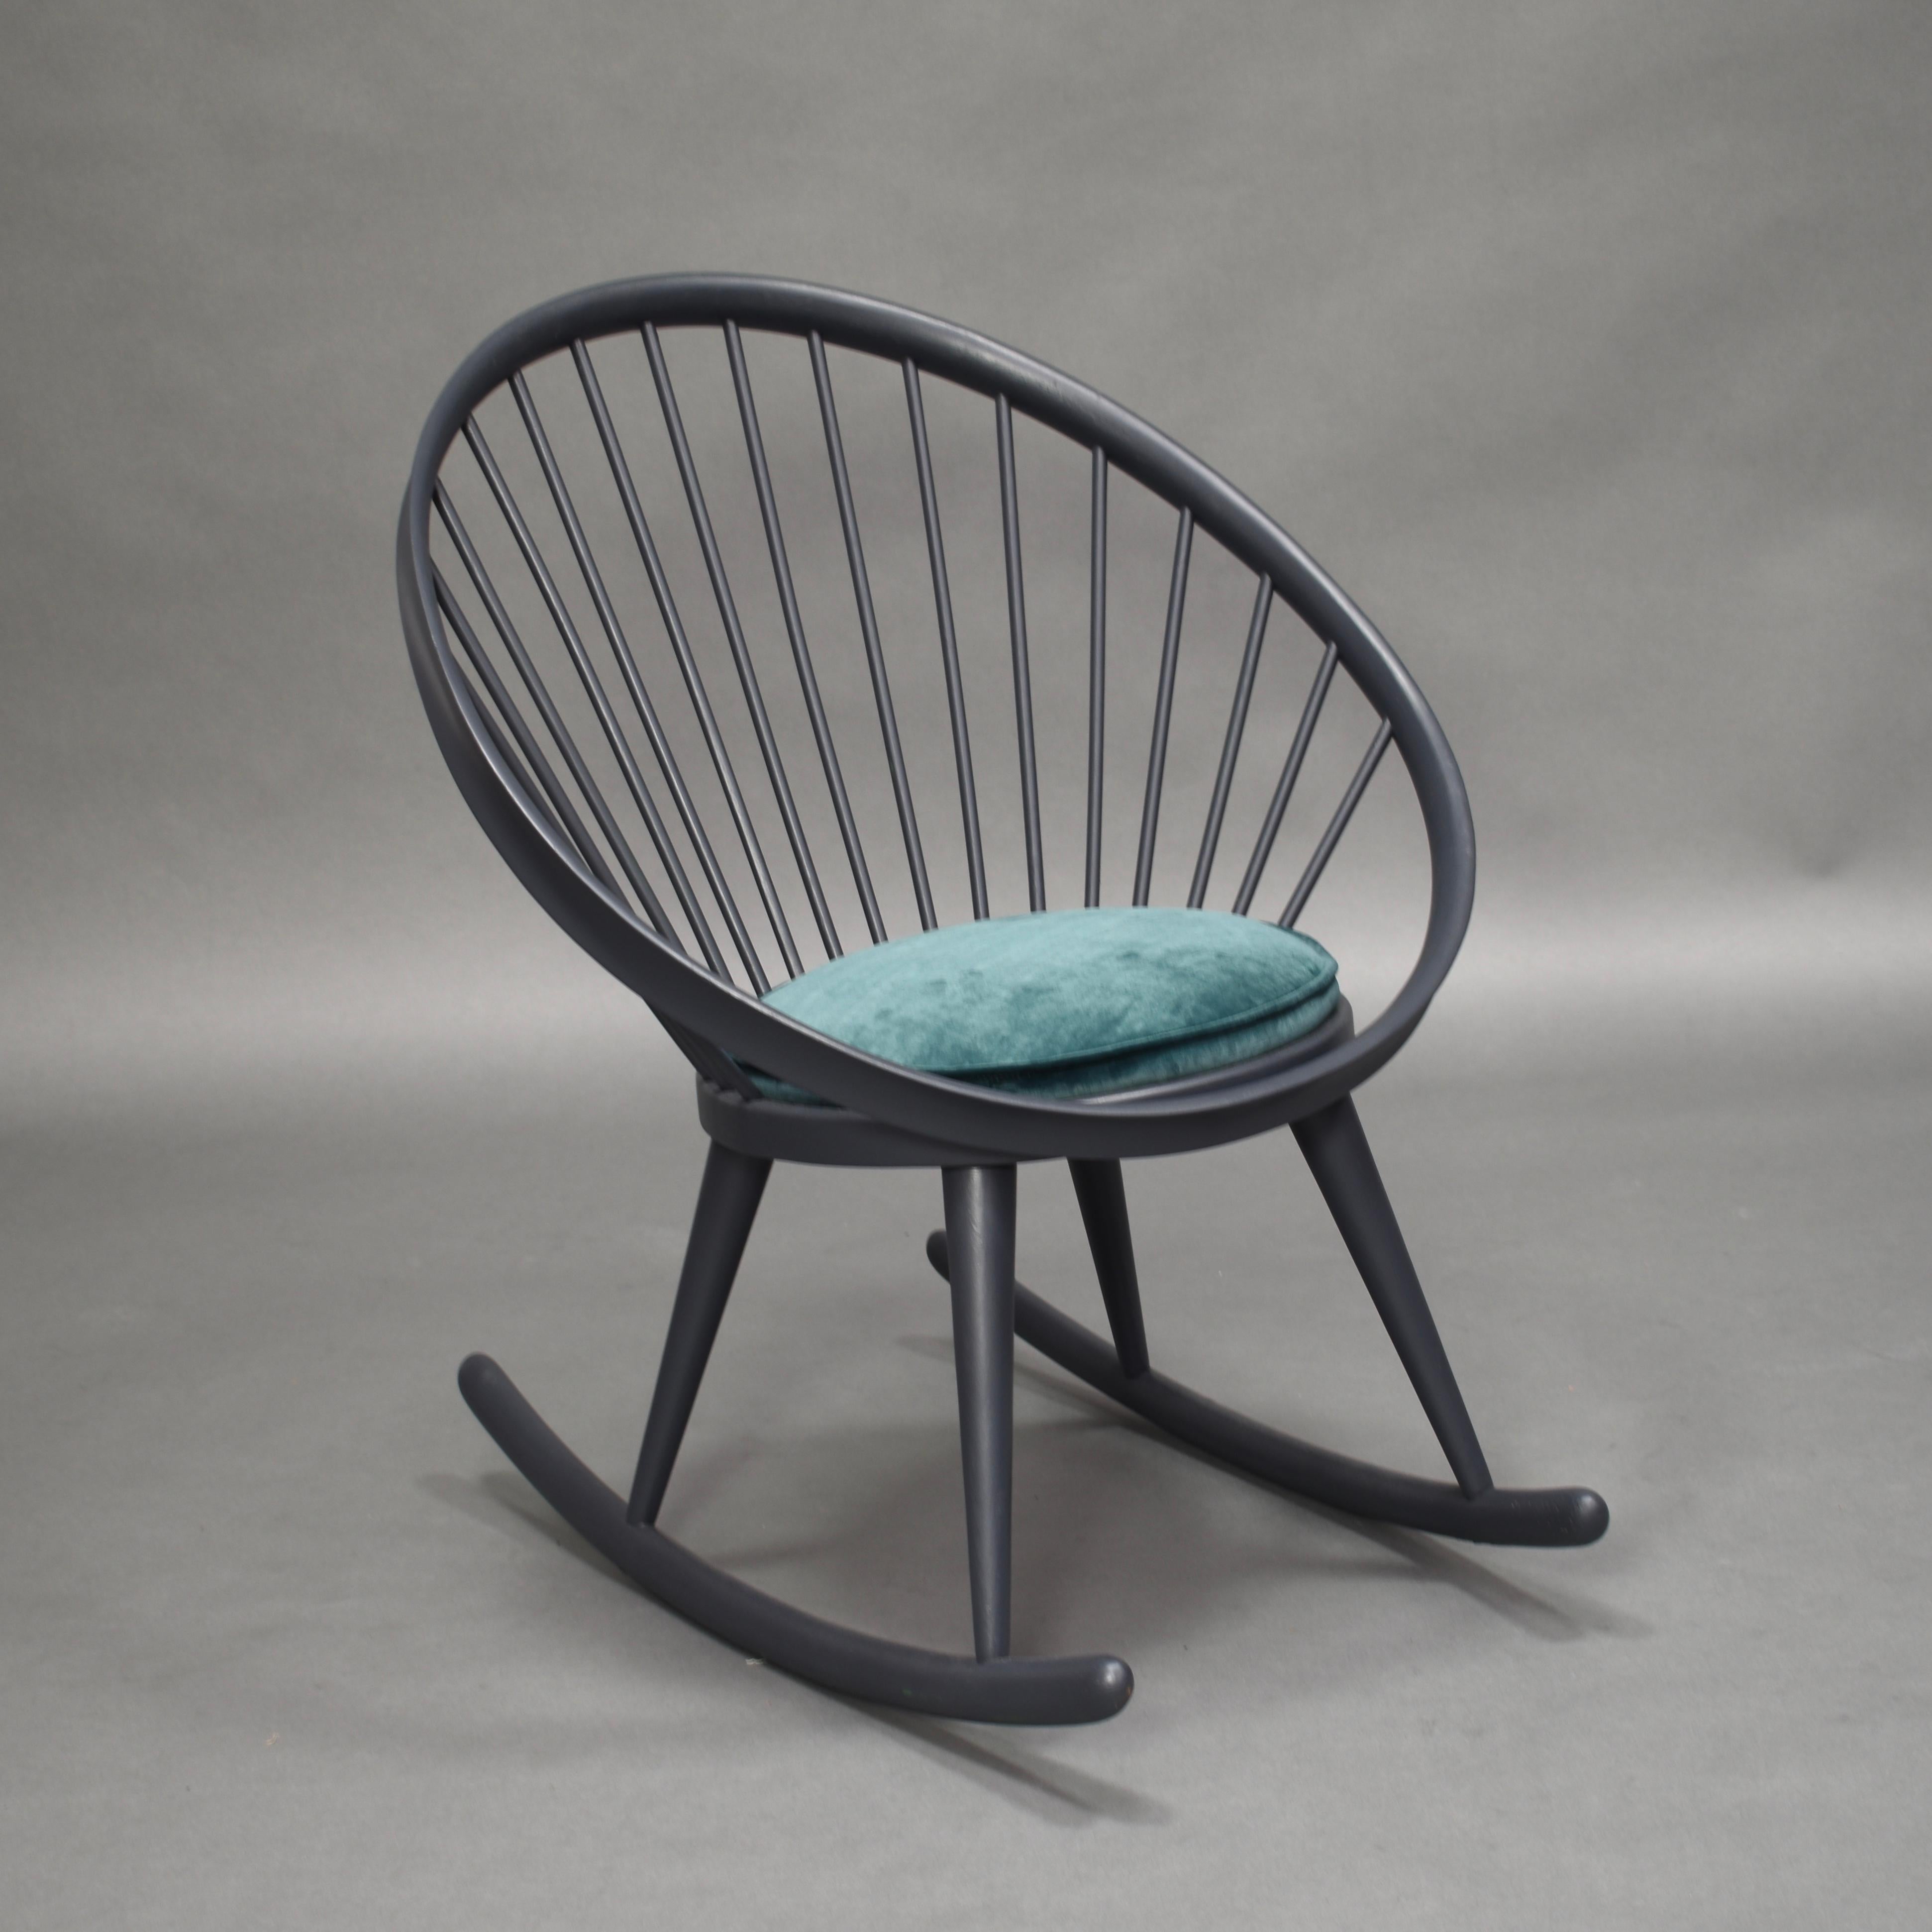 Rare ‘Circle’ rocking chair by Yngve Ekström – Sweden, 1960s.

Designer: Yngve Ekström

Manufacturer: Stol AB Sweden.

Country: Sweden

Model: Circle rocking chair

Design period: circa 1960

Date of manufacturing: circa 1960

Size cm